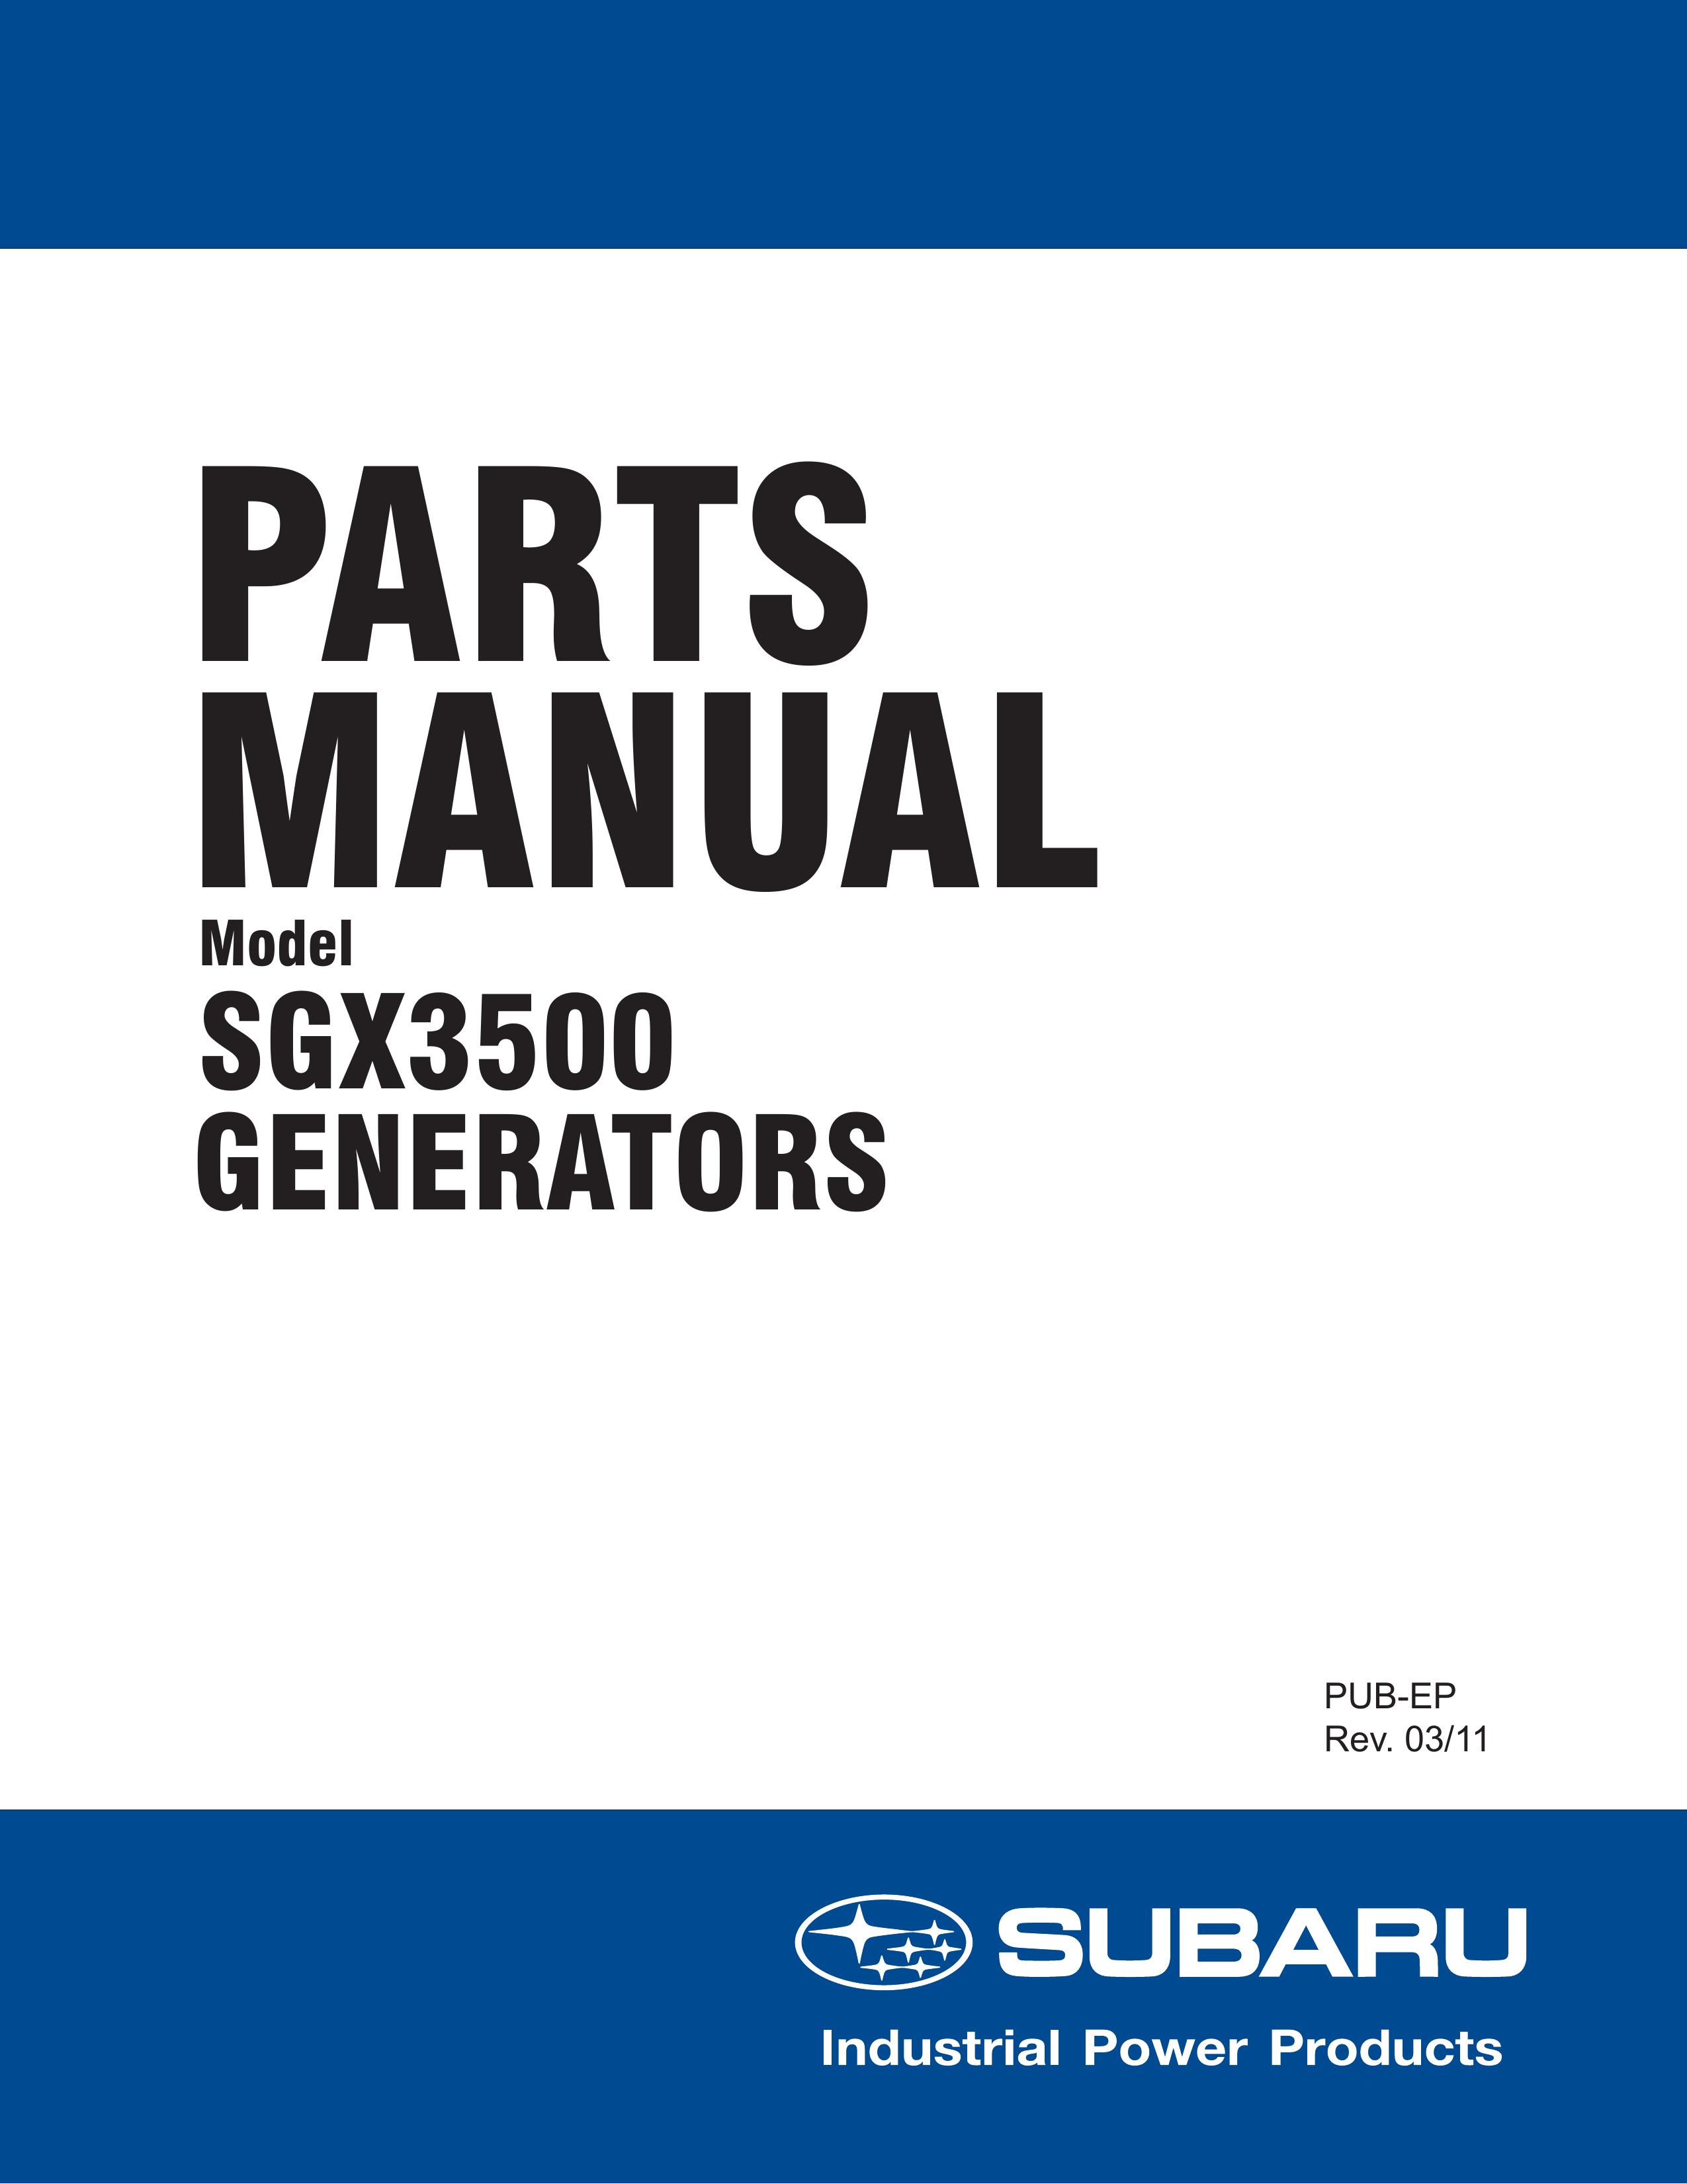 Subaru SGX3500 Portable Generator User Manual